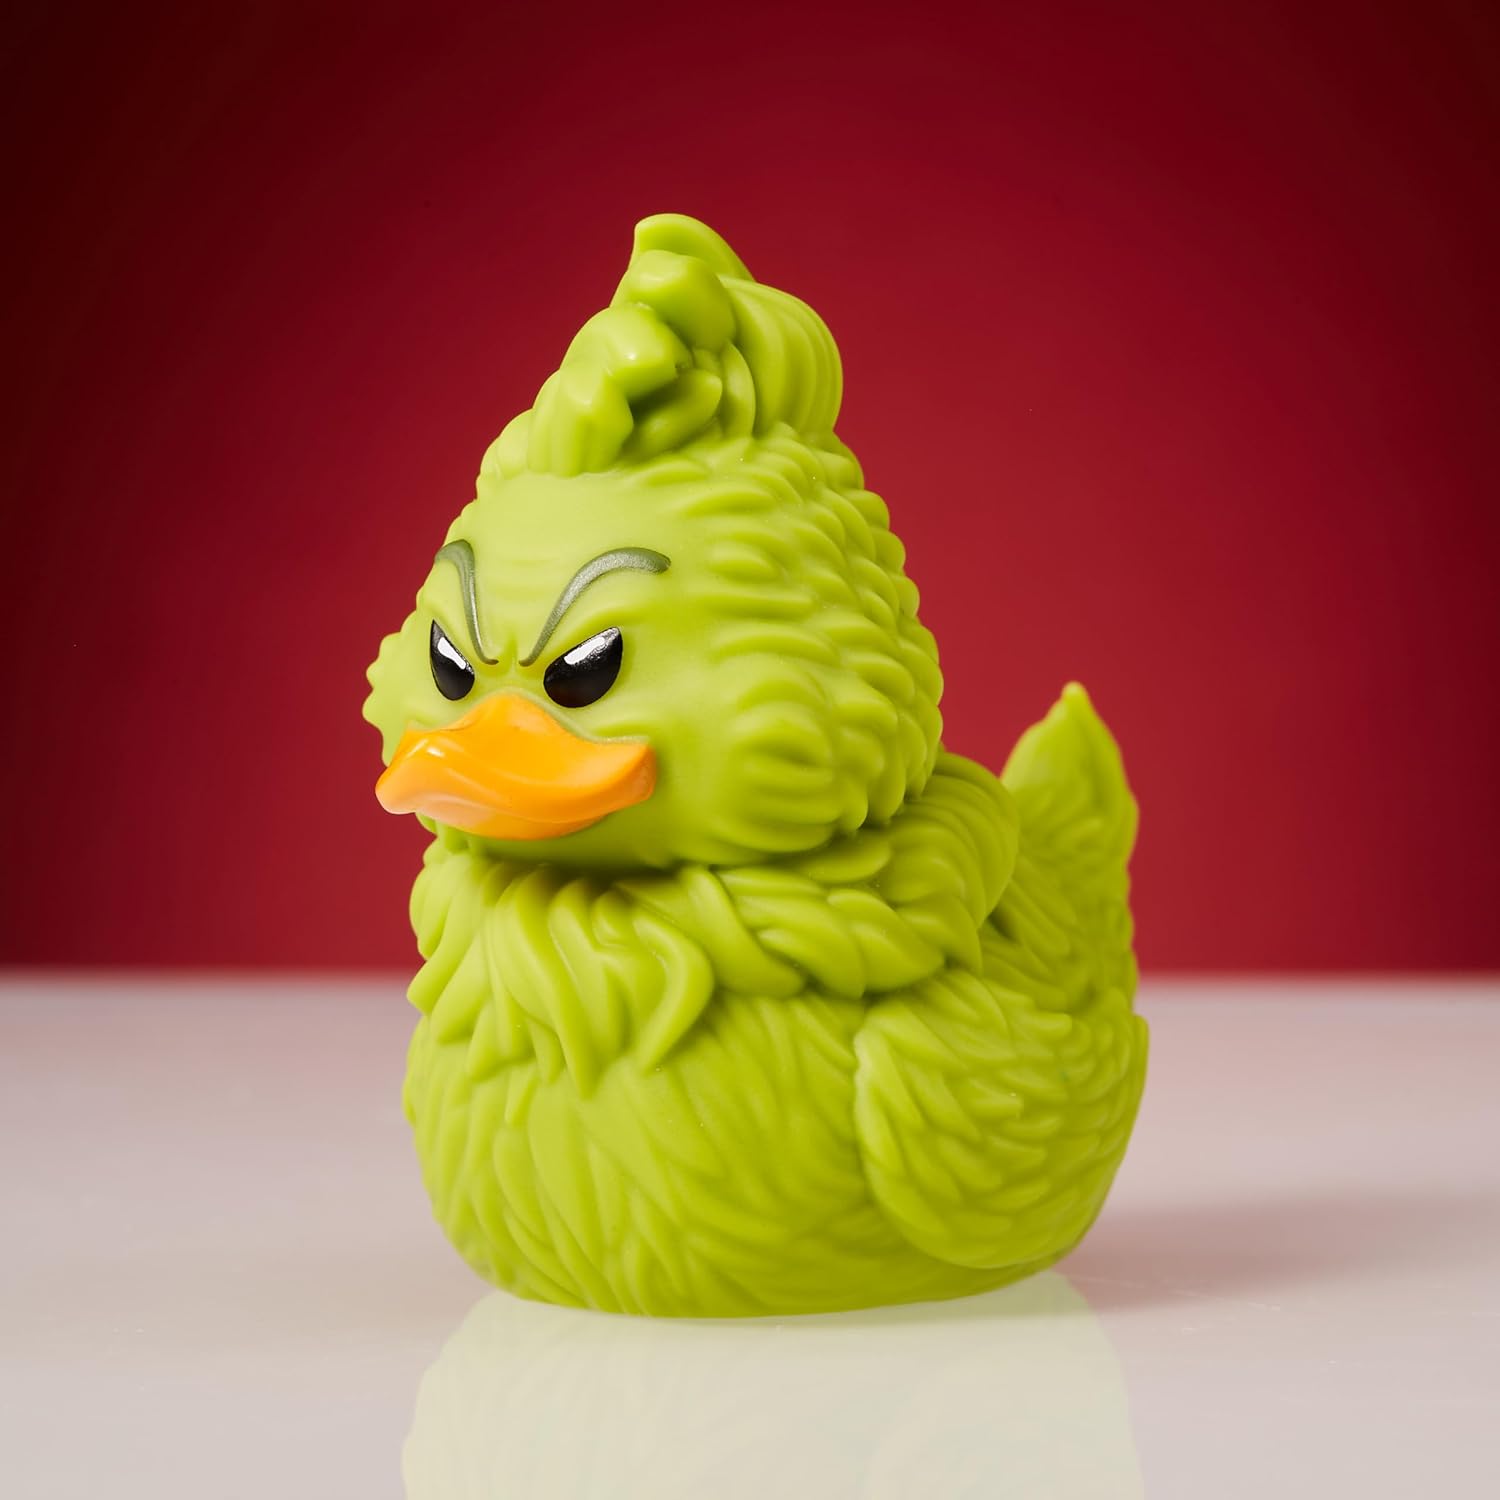 Numskull - Mini TUBBZ Canard de bain - Dr. Seuss - Le Grinch (Édition baignoire)